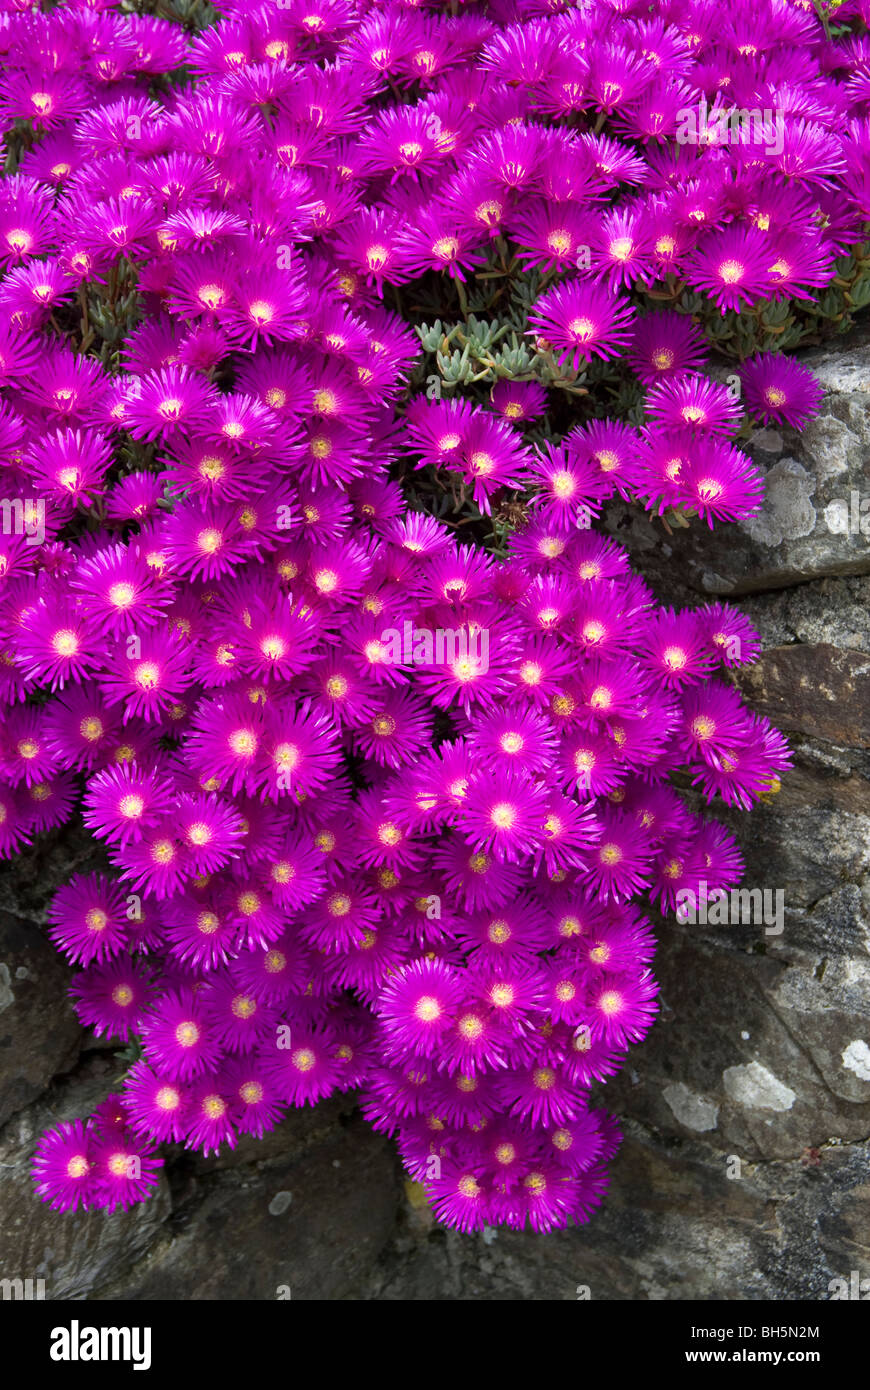 Purple trailing ice plant - Lampranthus Spectabilis - flower family 'Aizoaceae' Stock Photo